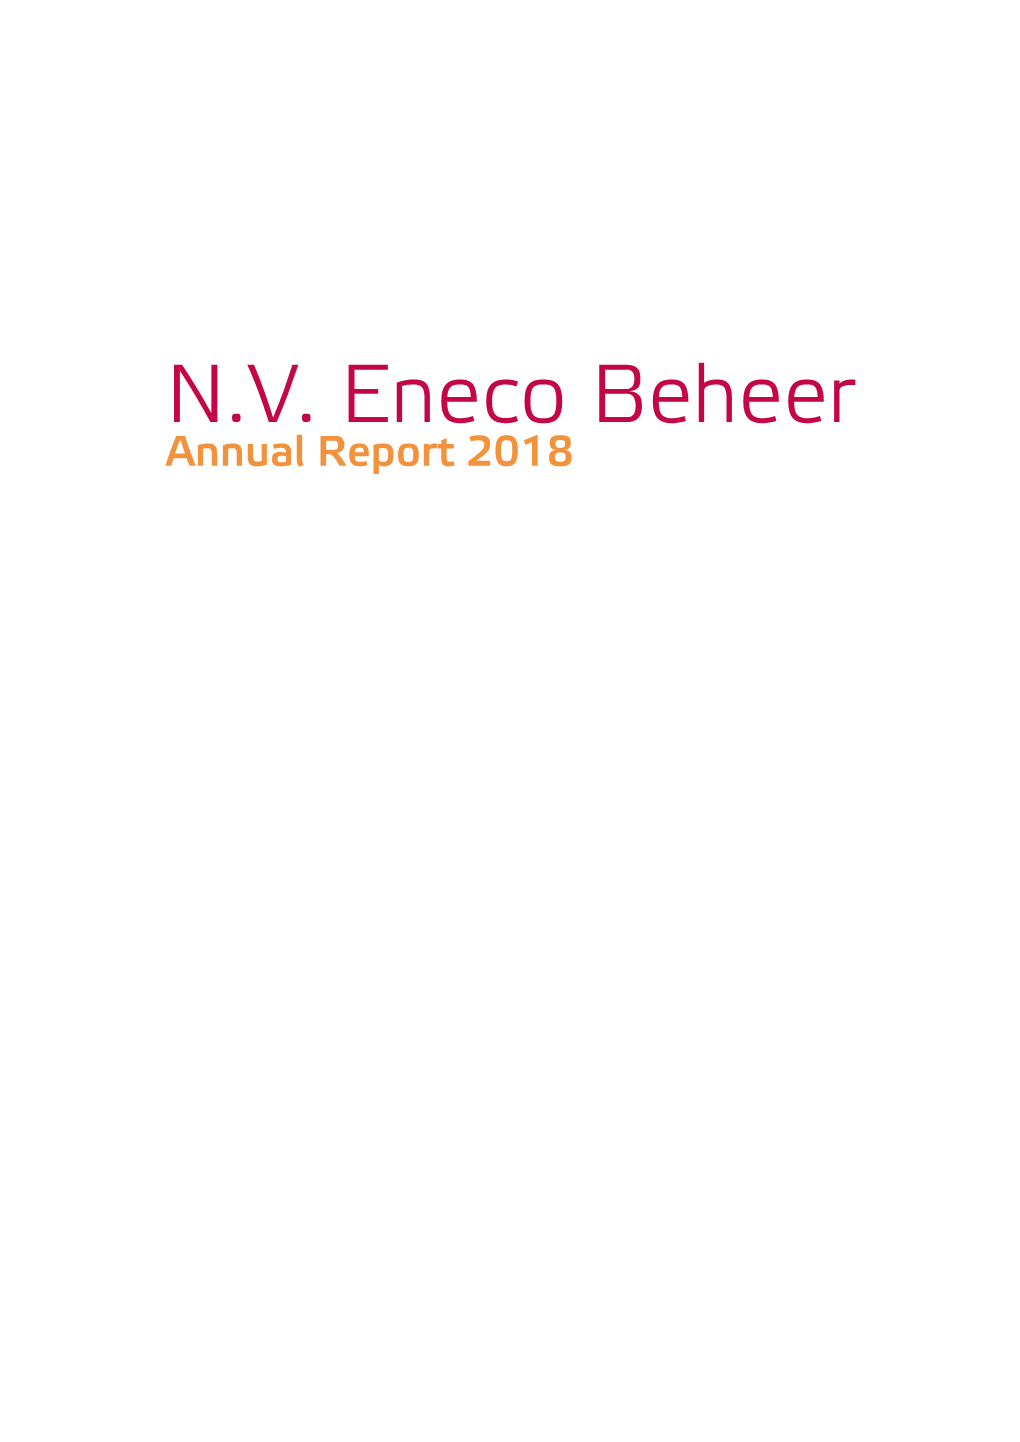 N.V. Eneco Beheer Annual Report 2018 N Contents C Strategy O Progress Q Financial Statements S Annexes Eneco Beheer | Annual Report 2018 3 Table of Contents